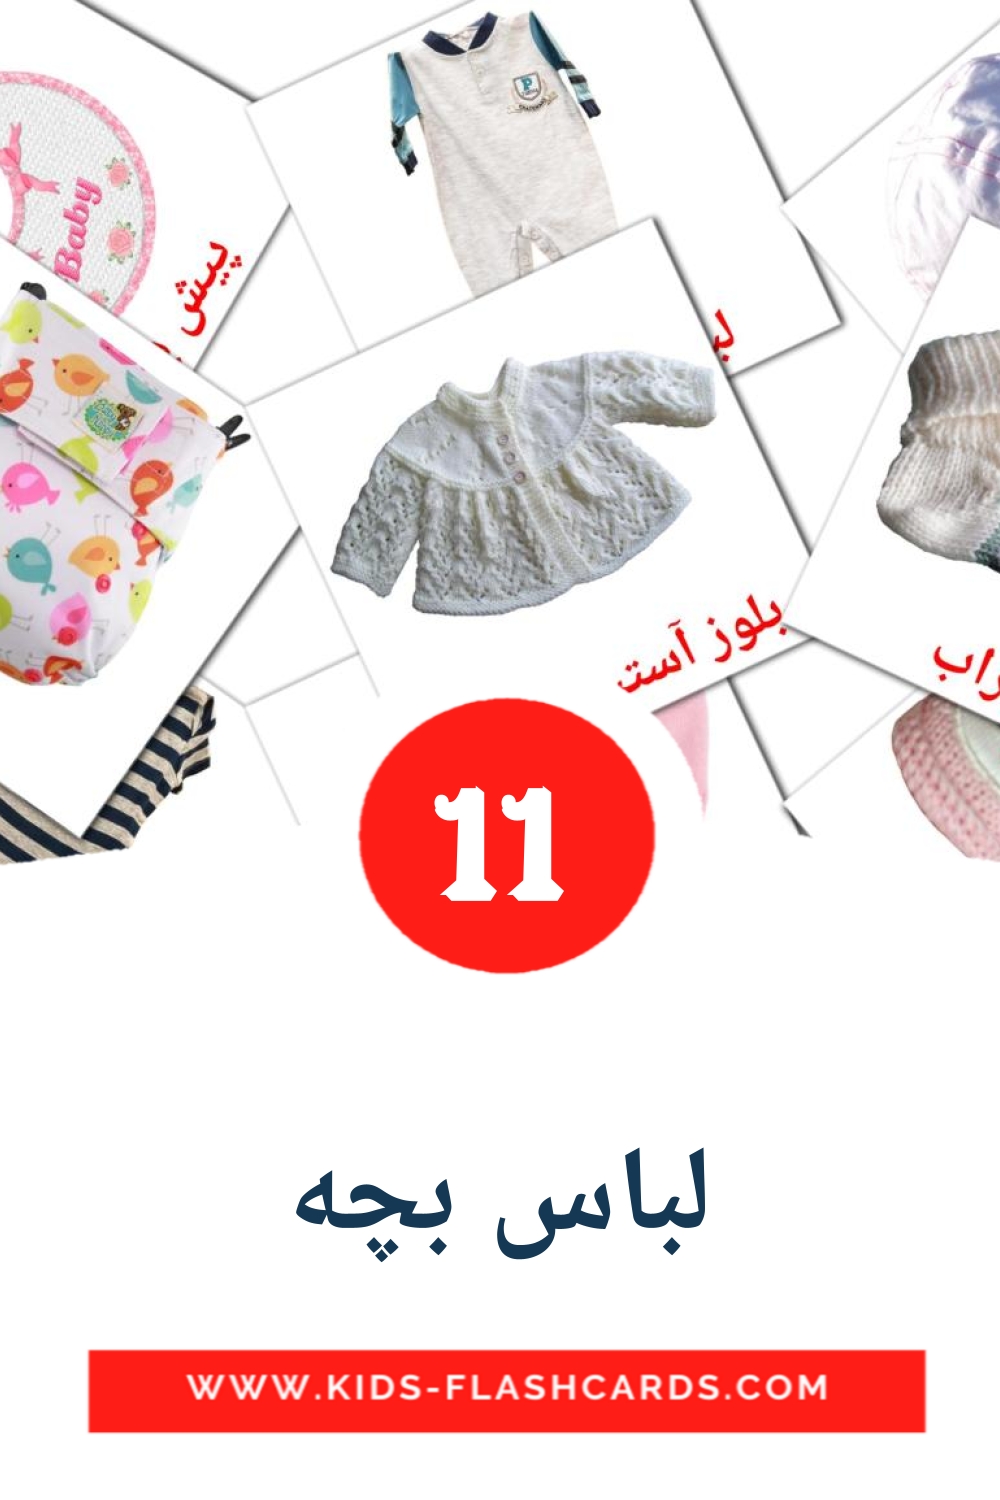 11 لباس بچه Picture Cards for Kindergarden in persian